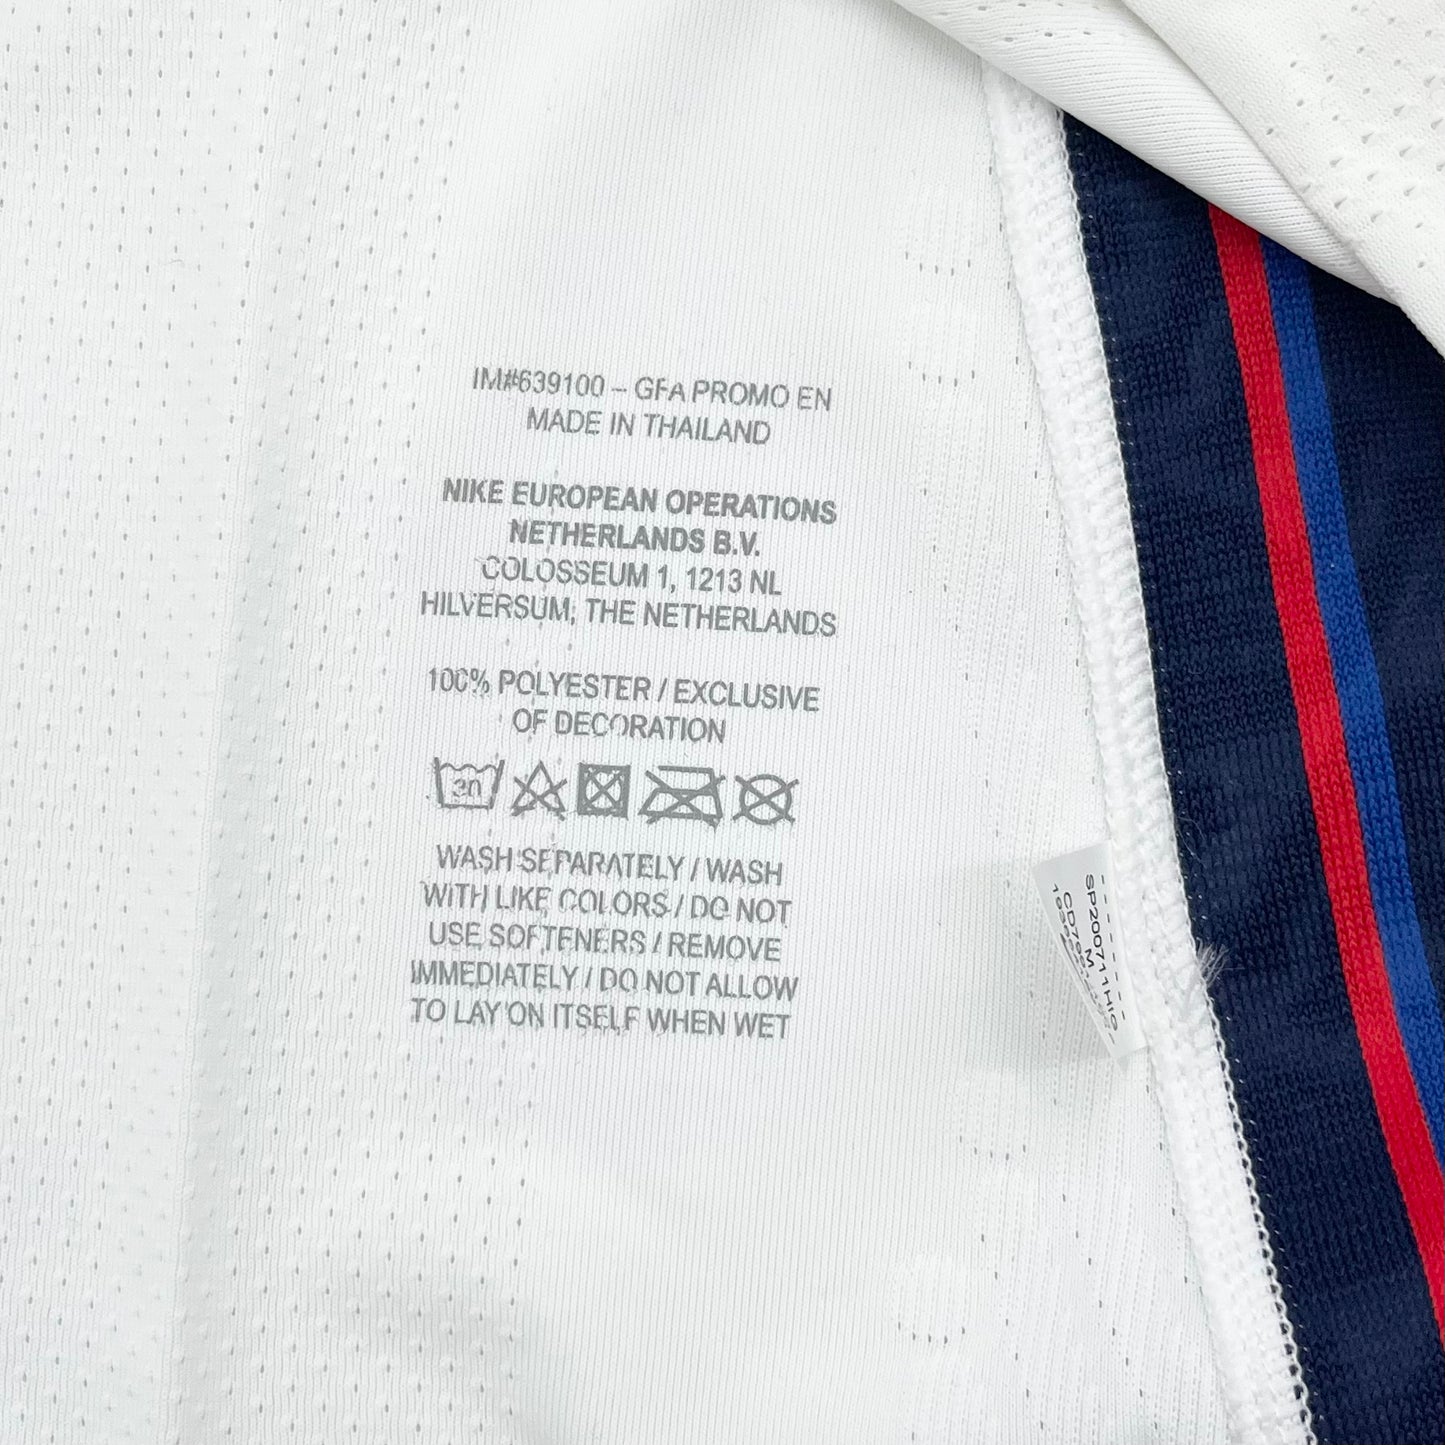 Jack Grealish Match Camisa Nike vaporknit usada Inglaterra vs Alemanha UEFA Euro 2020